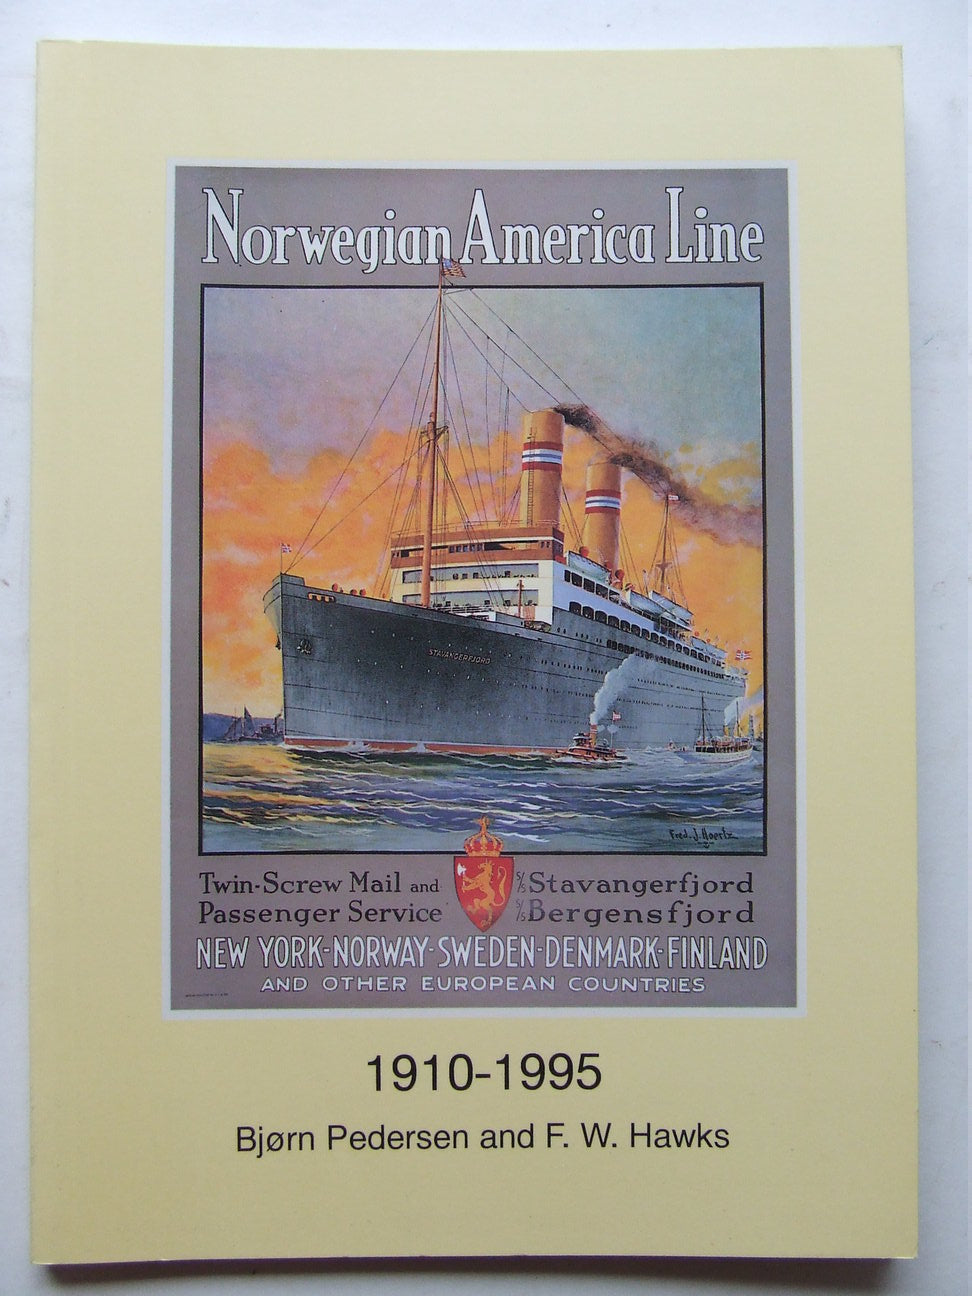 A History of Den Norske Amerikalinje A/S (Norweigian America Line) 1910-1995